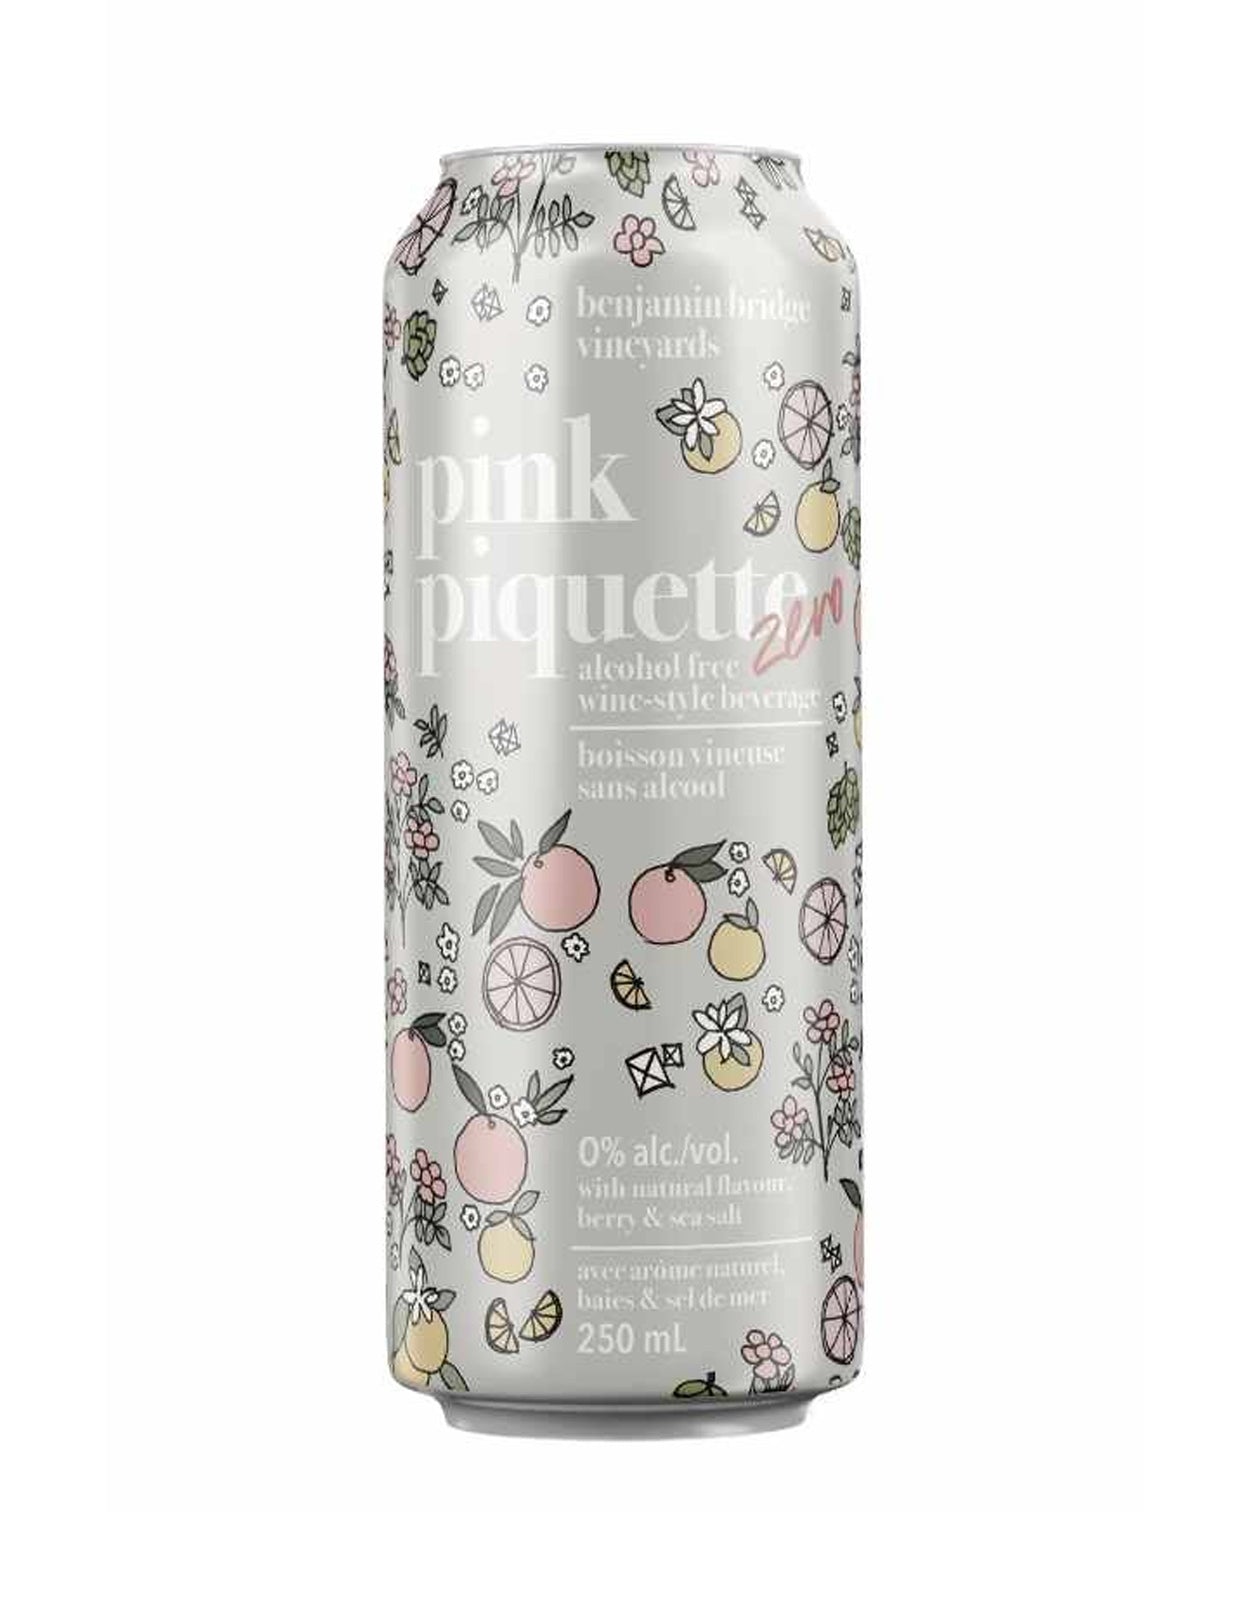 Benjamin Bridge Pink Piquette Zero (Non Alcoholic) 250 ml - Single Can